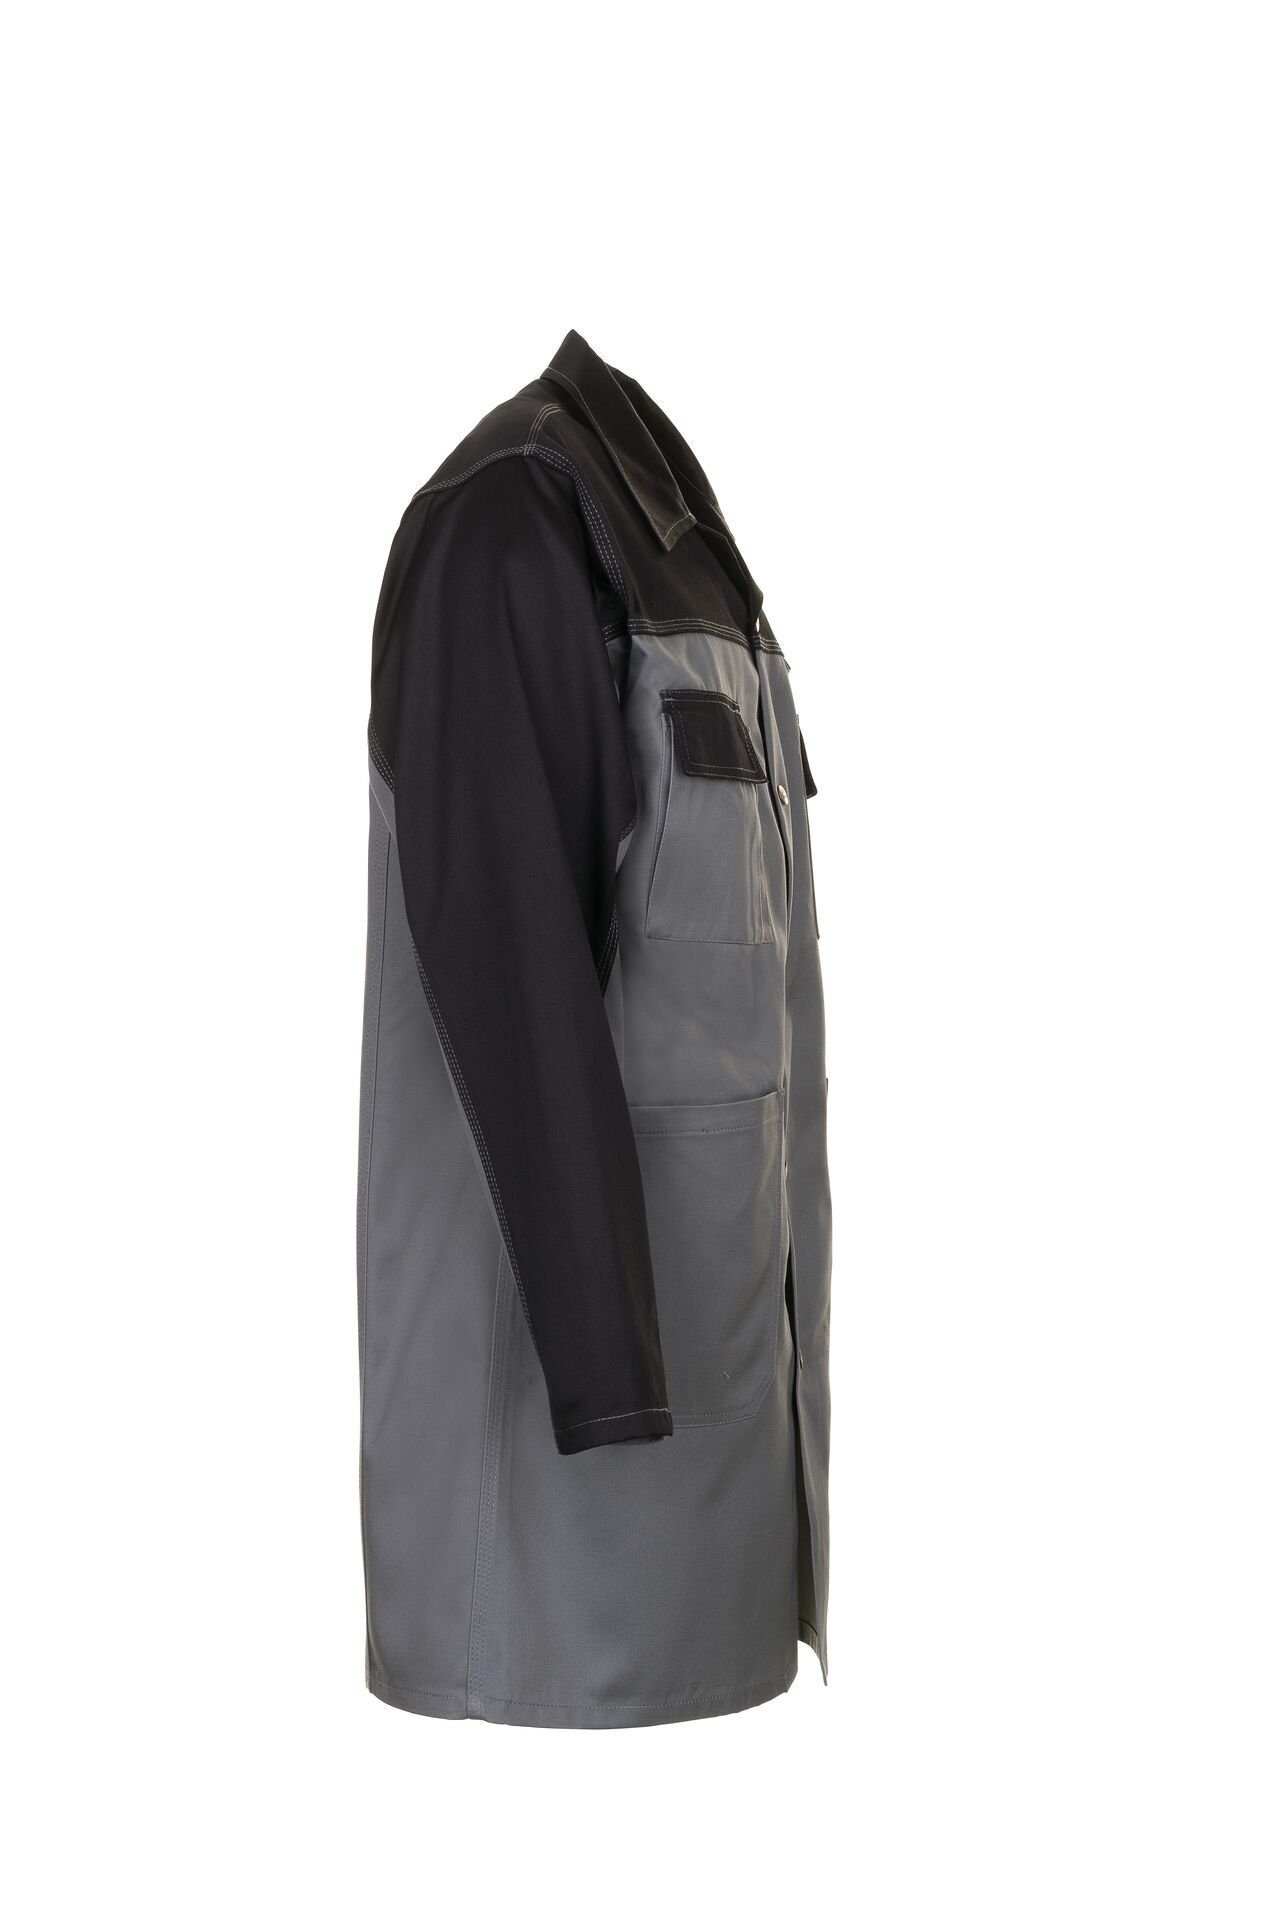 Berufsmantel Tristep Größe grau/schwarz Arbeitsjacke 102 Planam